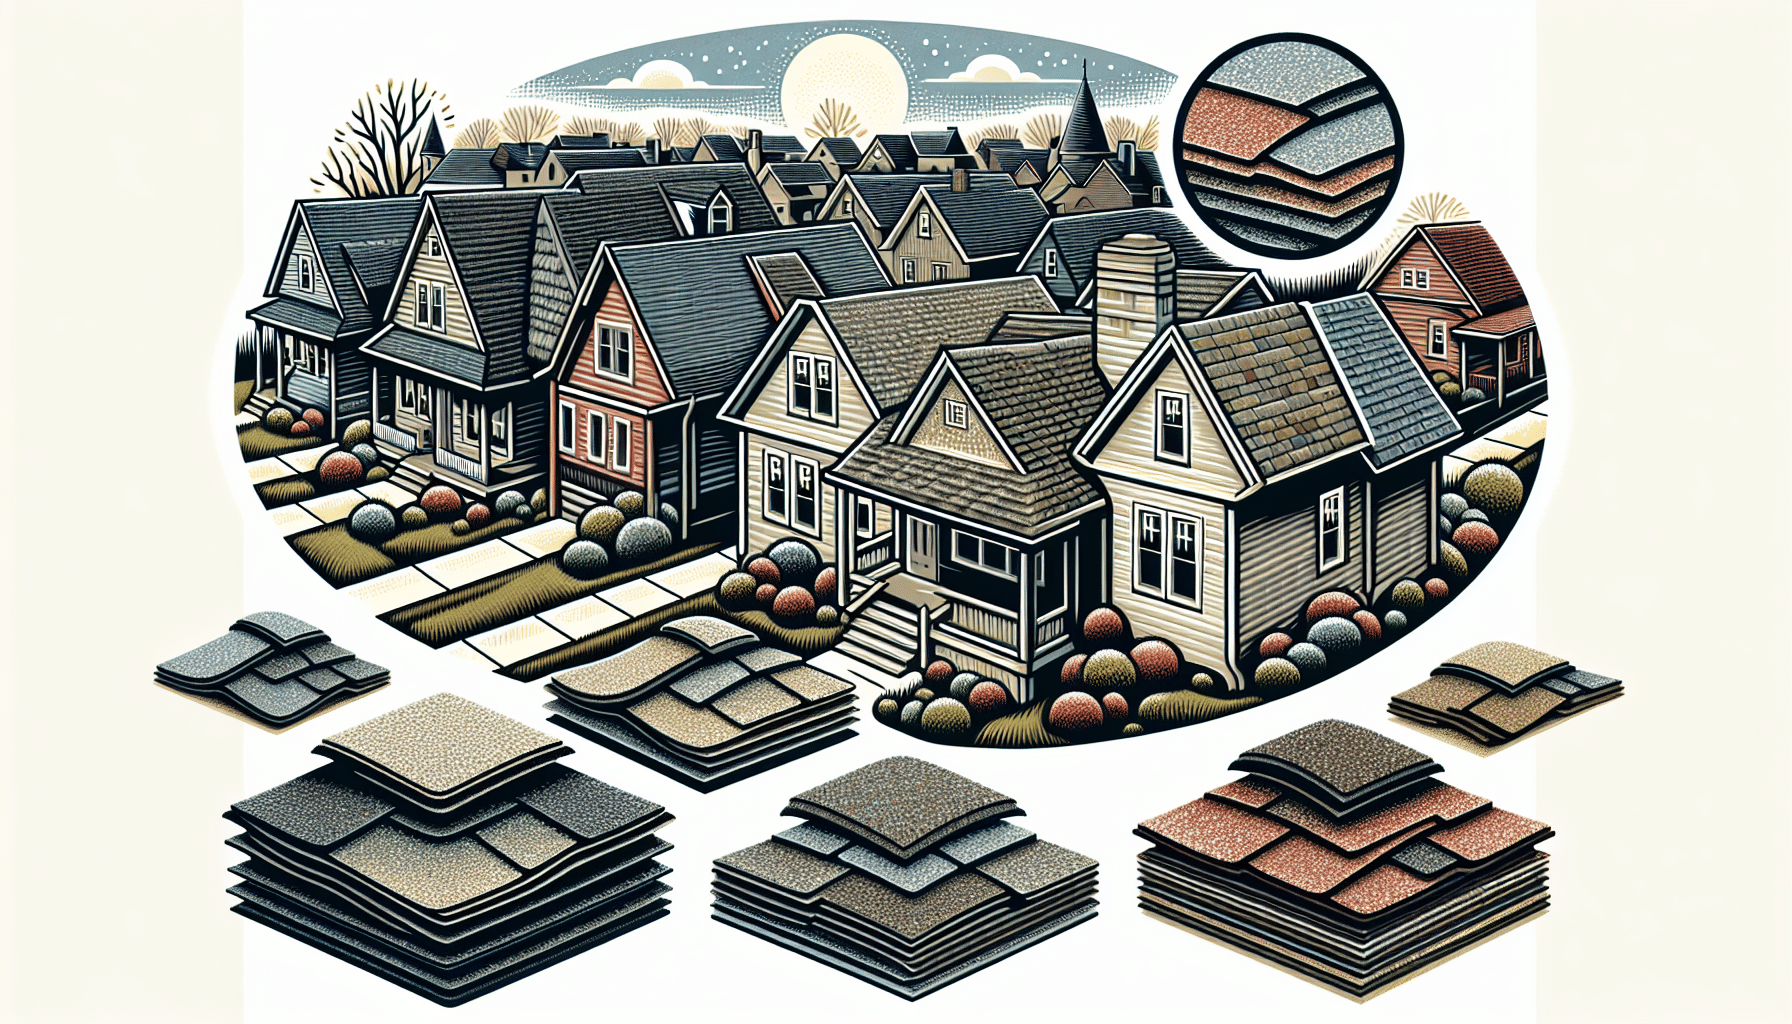 Asphalt shingles, a popular roofing choice